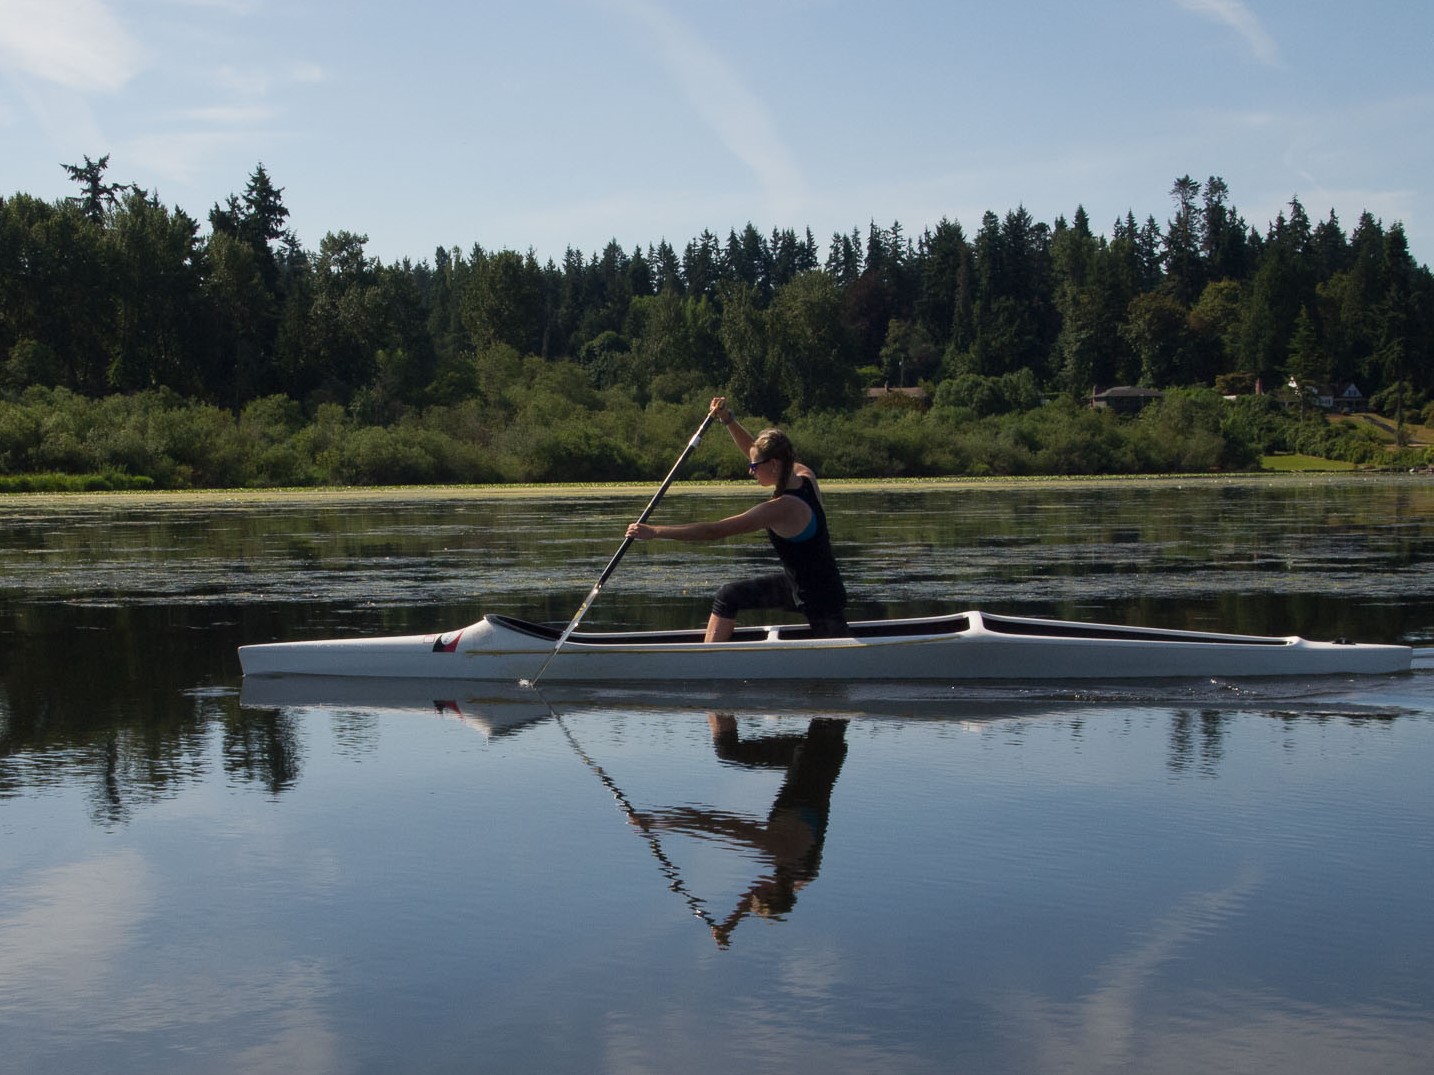 Sprint canoe on Lake Washington